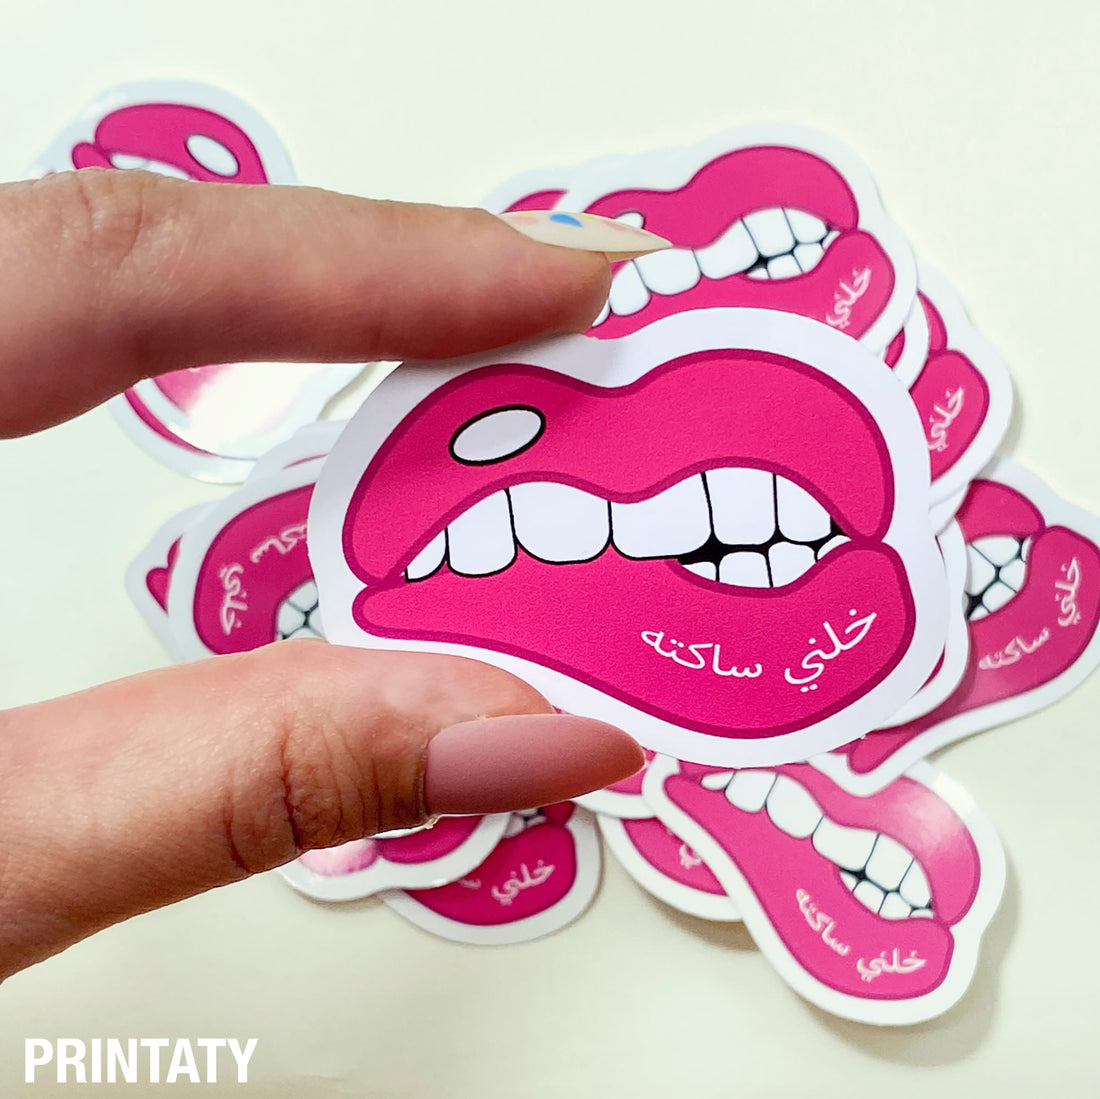 Sticker: let me be quite (Arabic / Qatari phrase)